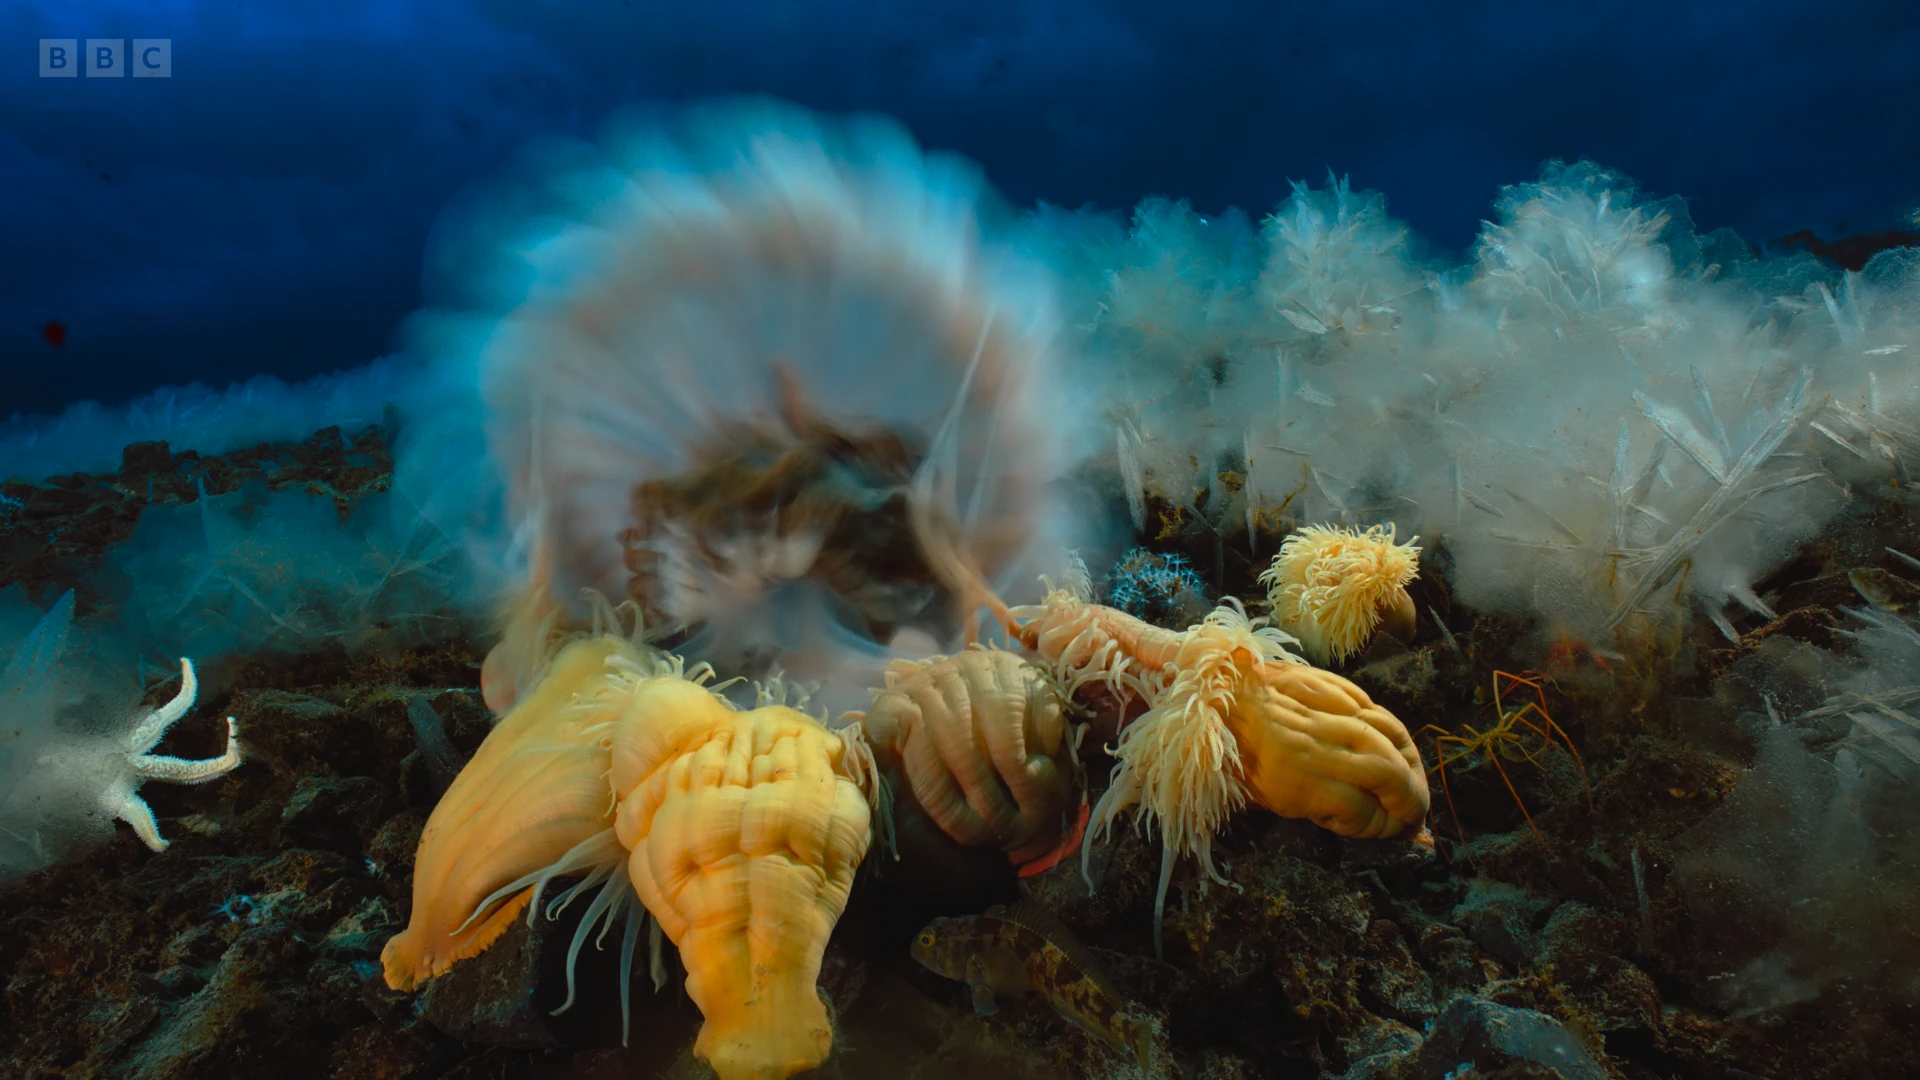 Sea anemone (Urticinopsis antarctica) as shown in Seven Worlds, One Planet - Antarctica